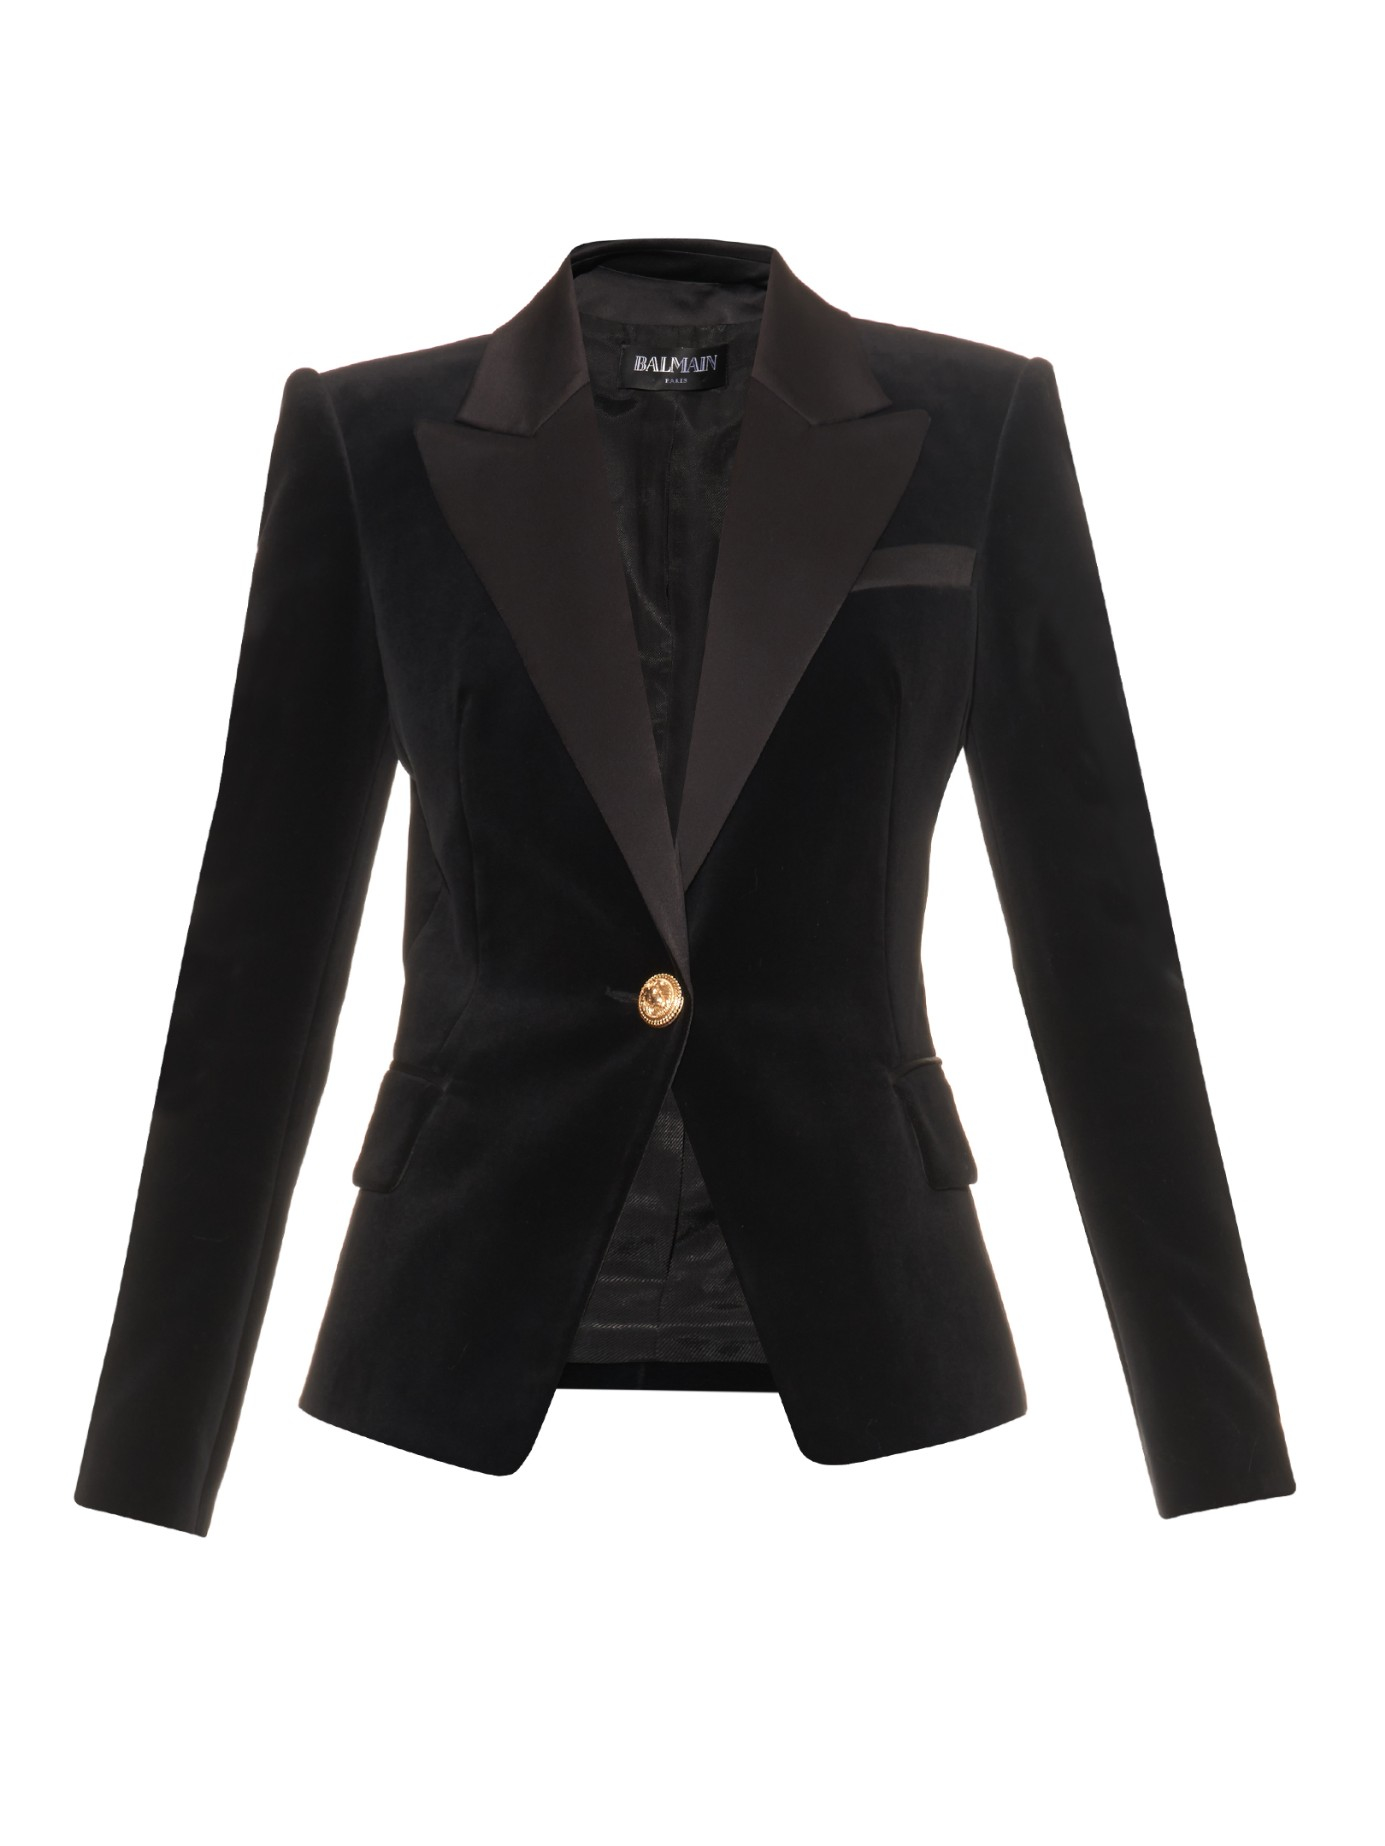 Balmain Satin-lapel Velvet Jacket in Black | Lyst